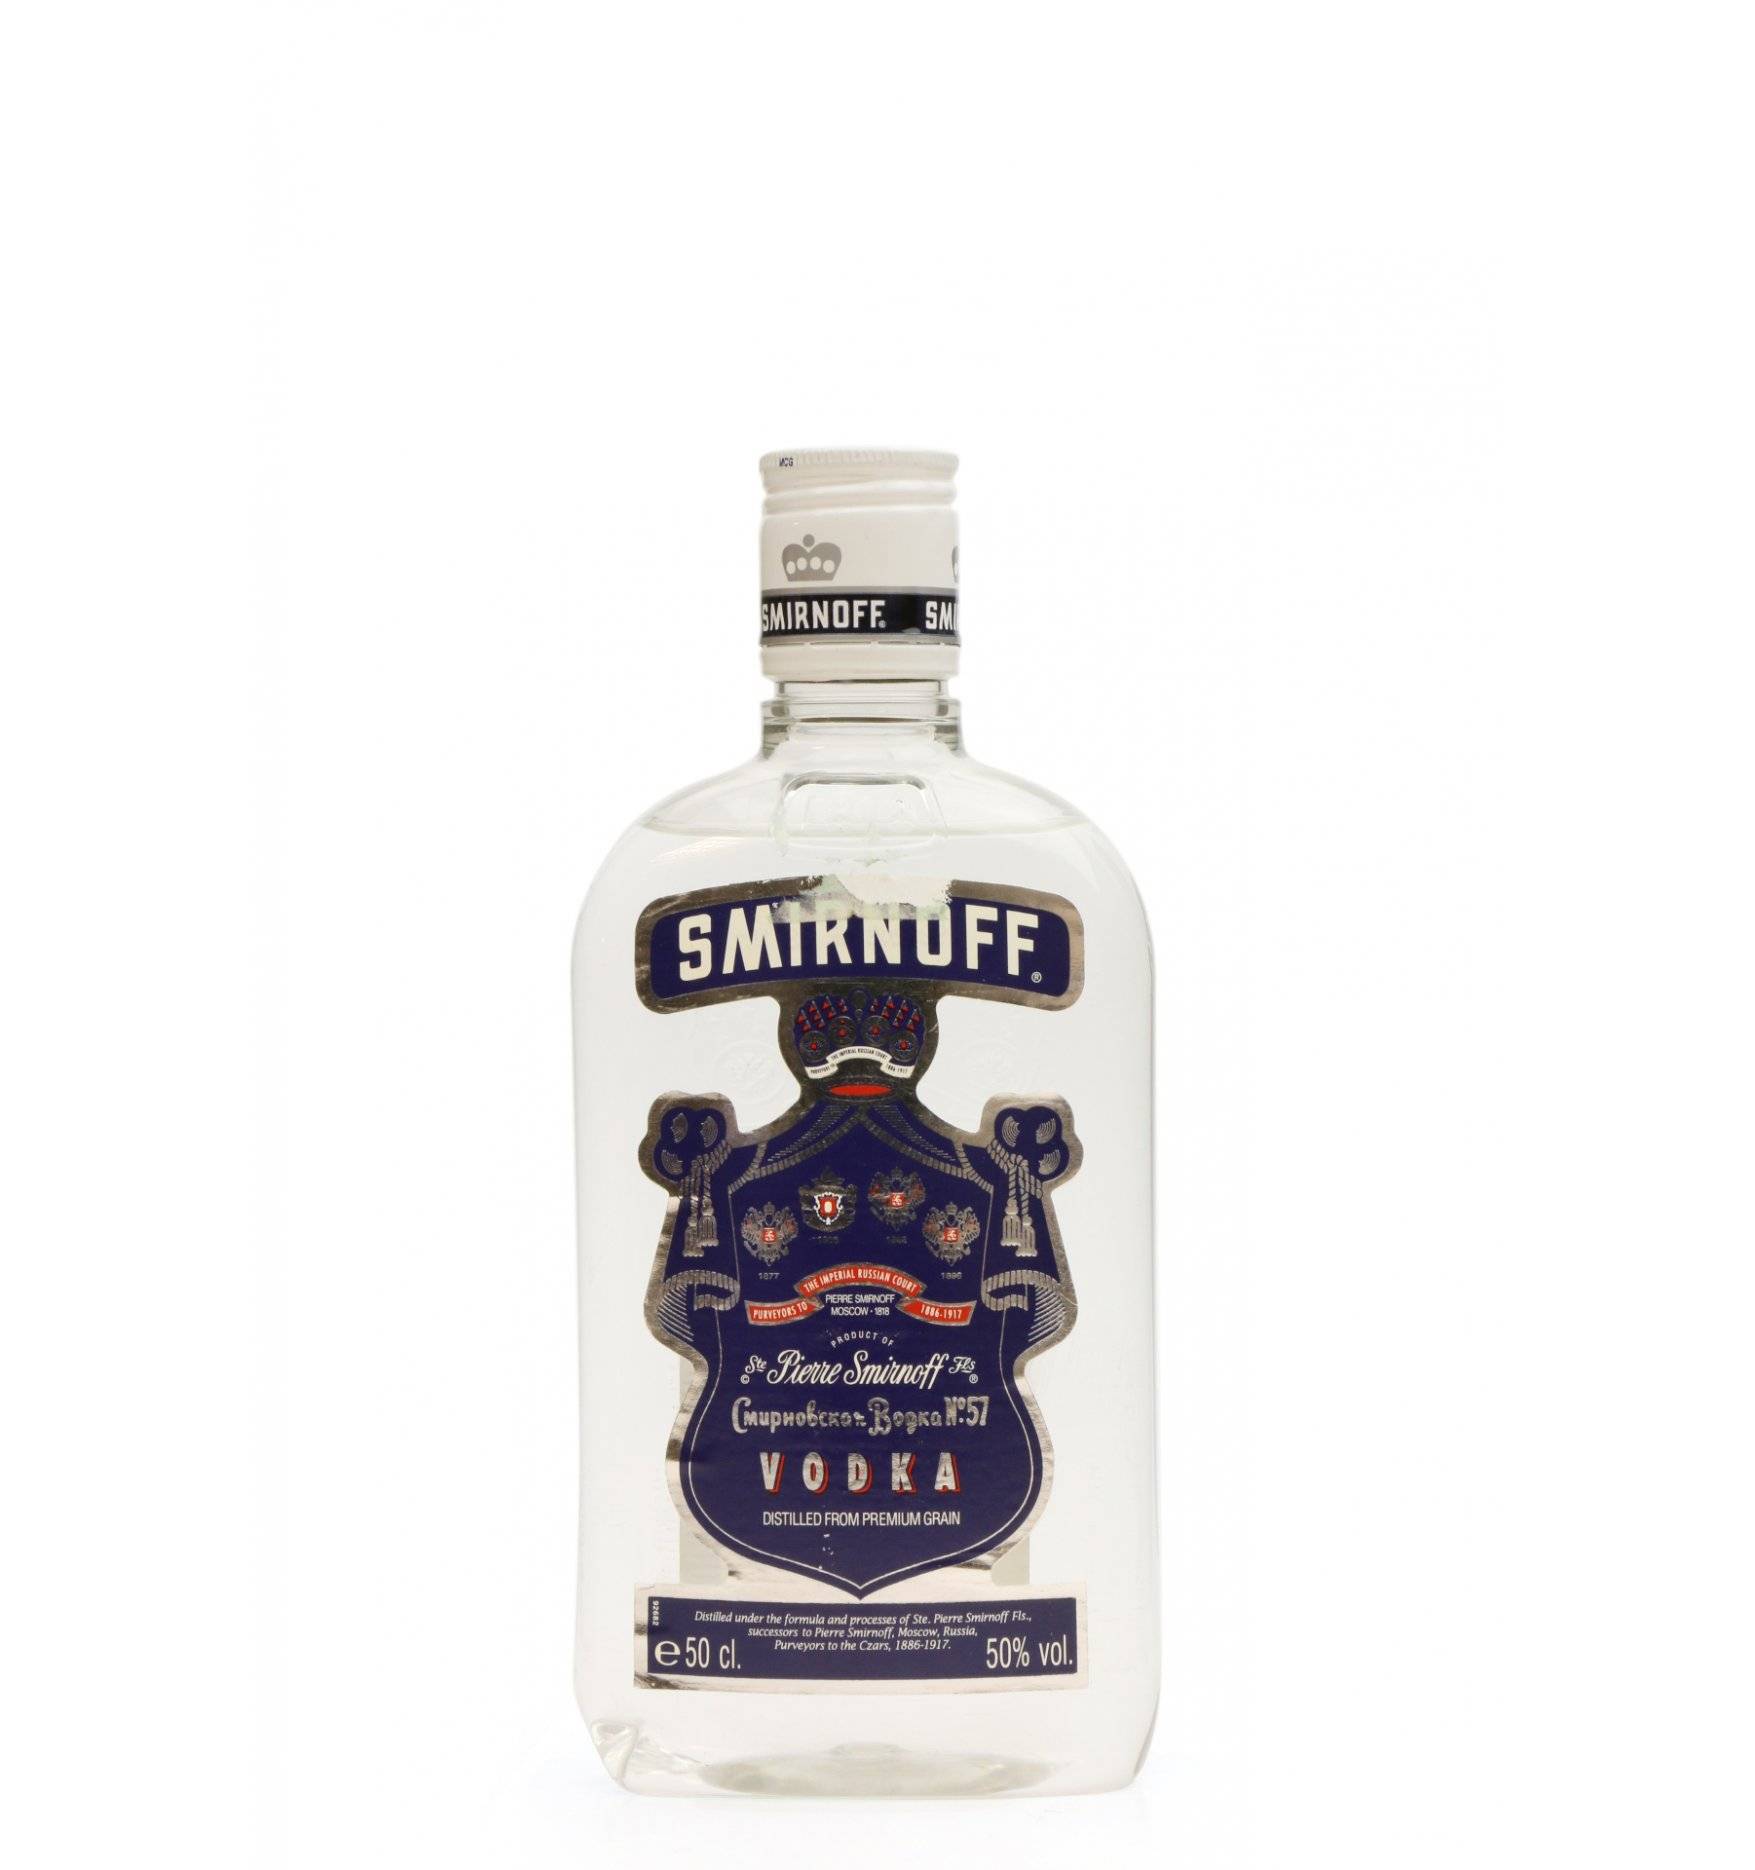 Smirnoff No. 57 Auctions Vodka Whisky (50cl) Just 